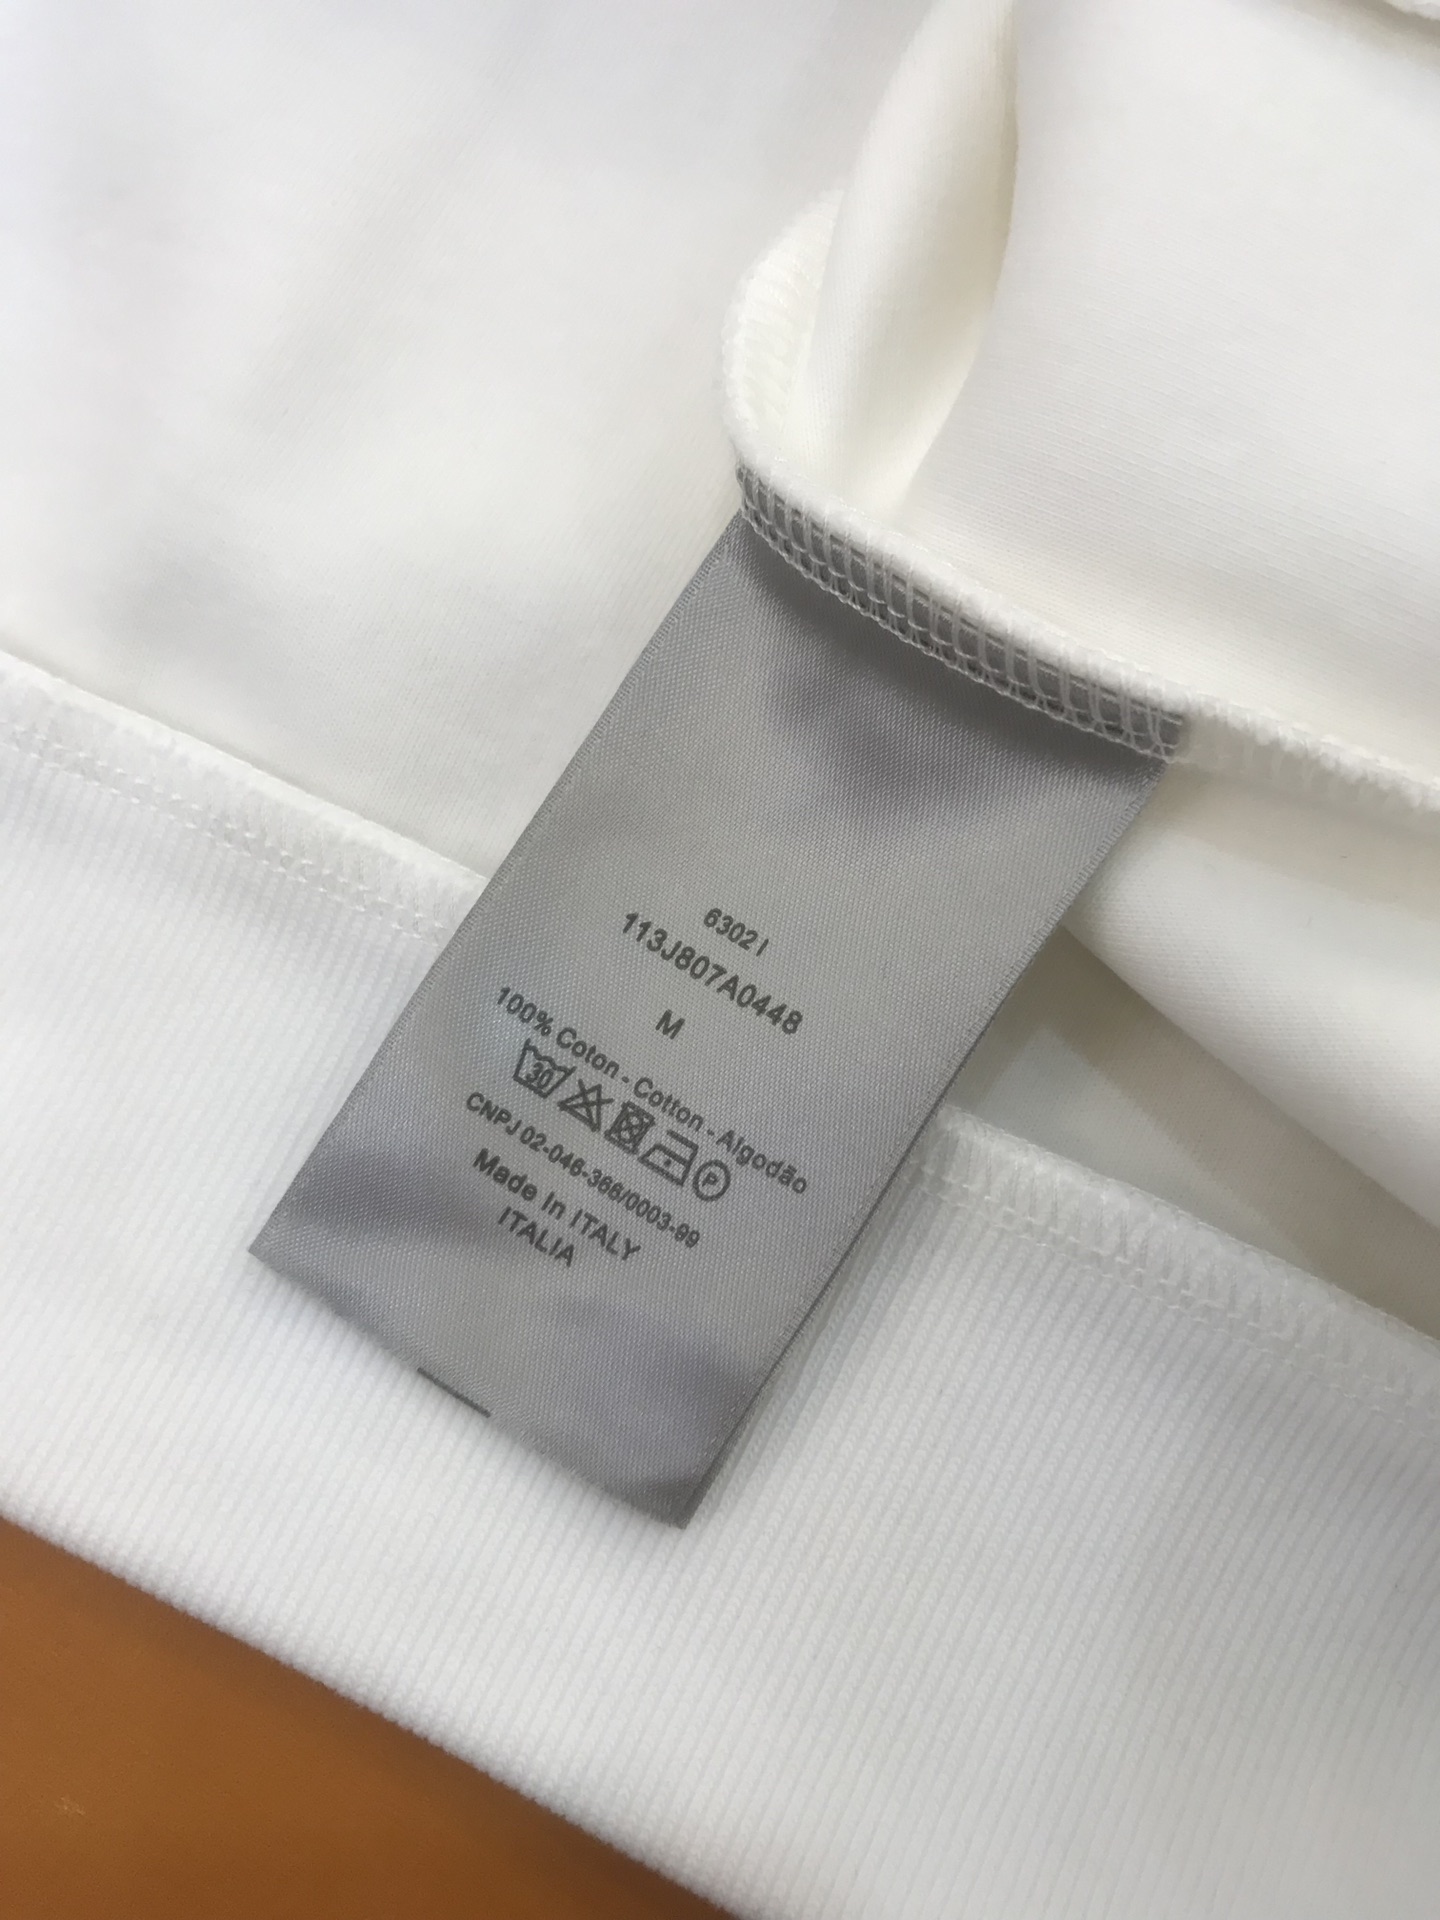 Dior Jacket Oblique in White